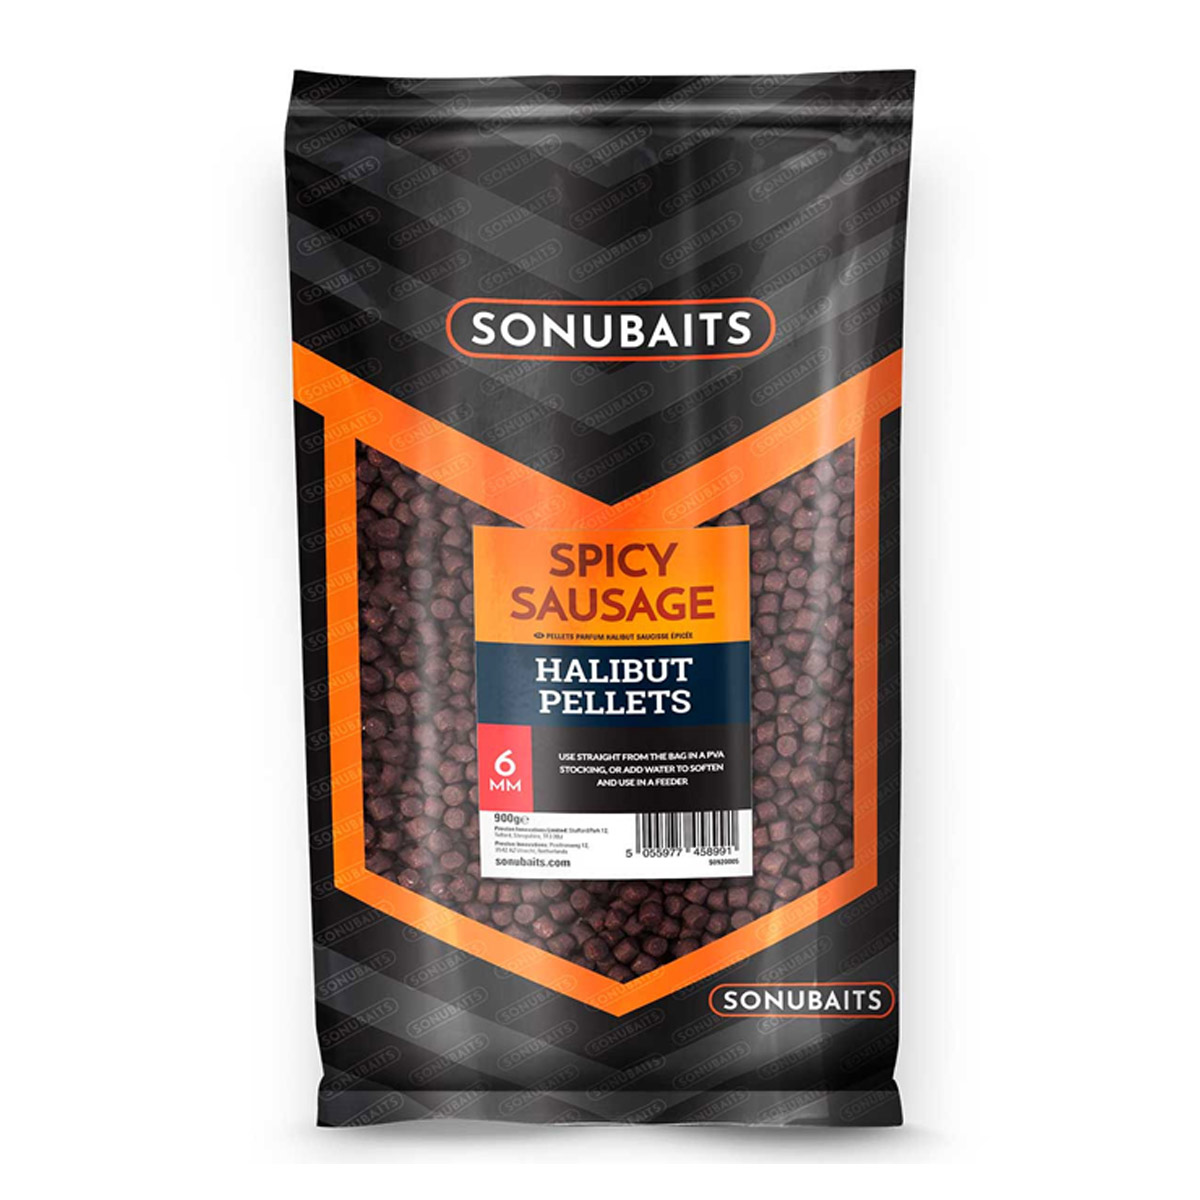 Sonubaits Spicy Sausage Halibut Pellets -  6 mm